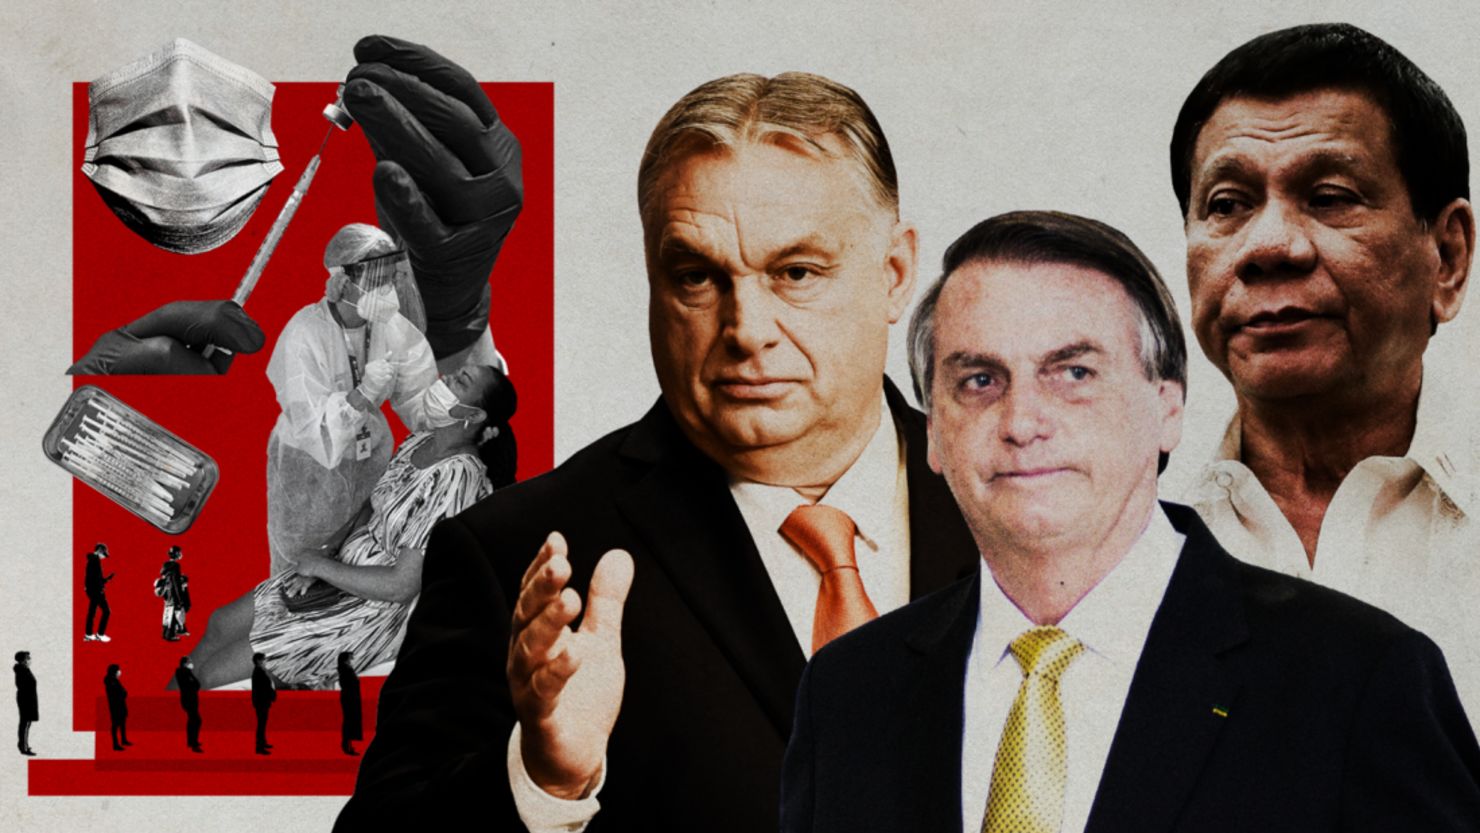 How will Hungary's Viktor Orbán, Brazil's Jair Bolsonaro and the Philippine President Rodrigo Duterte be judged on their handling of the pandemic?